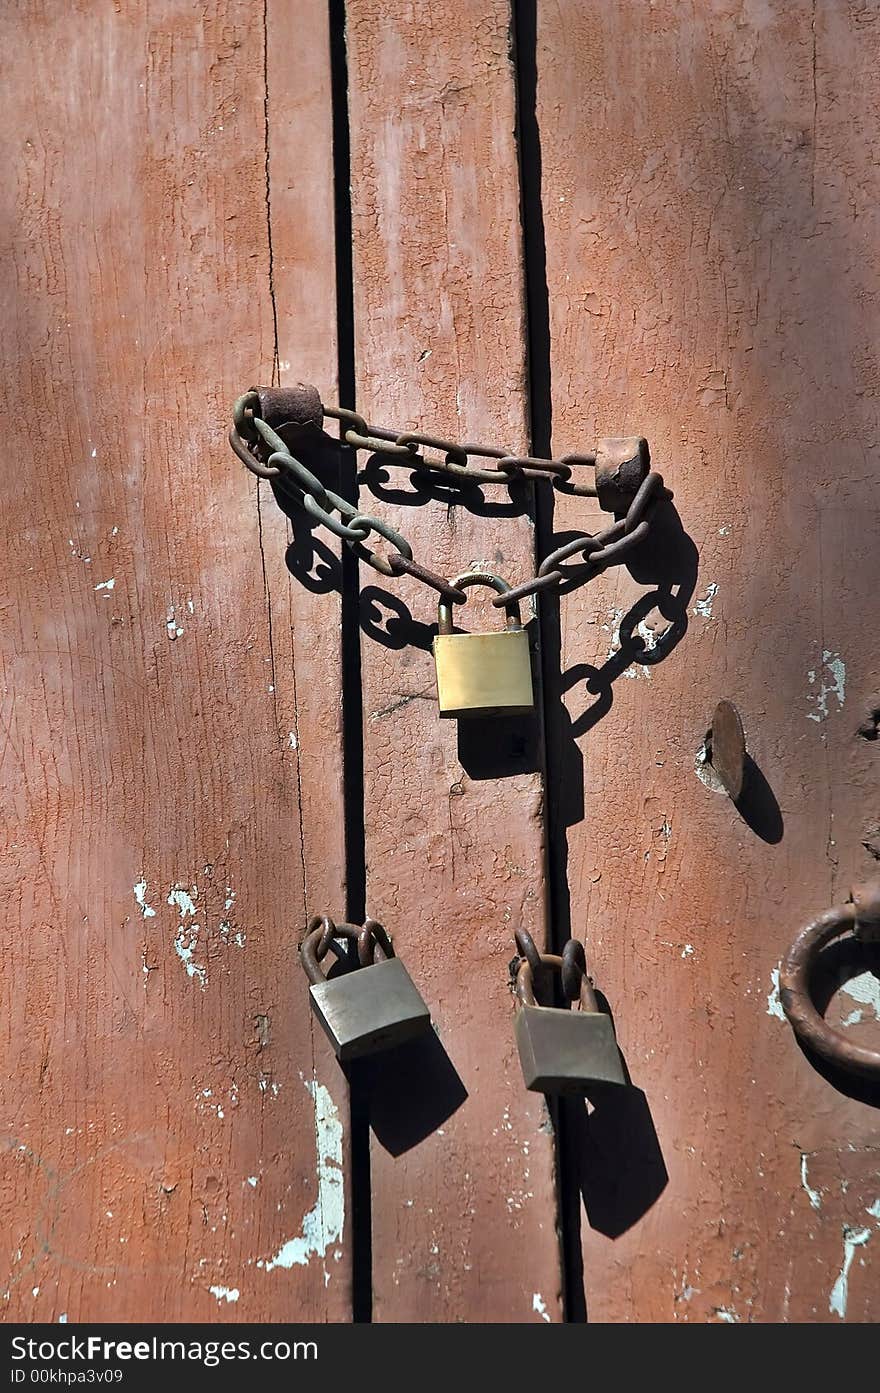 Three locks with chain on peeling door